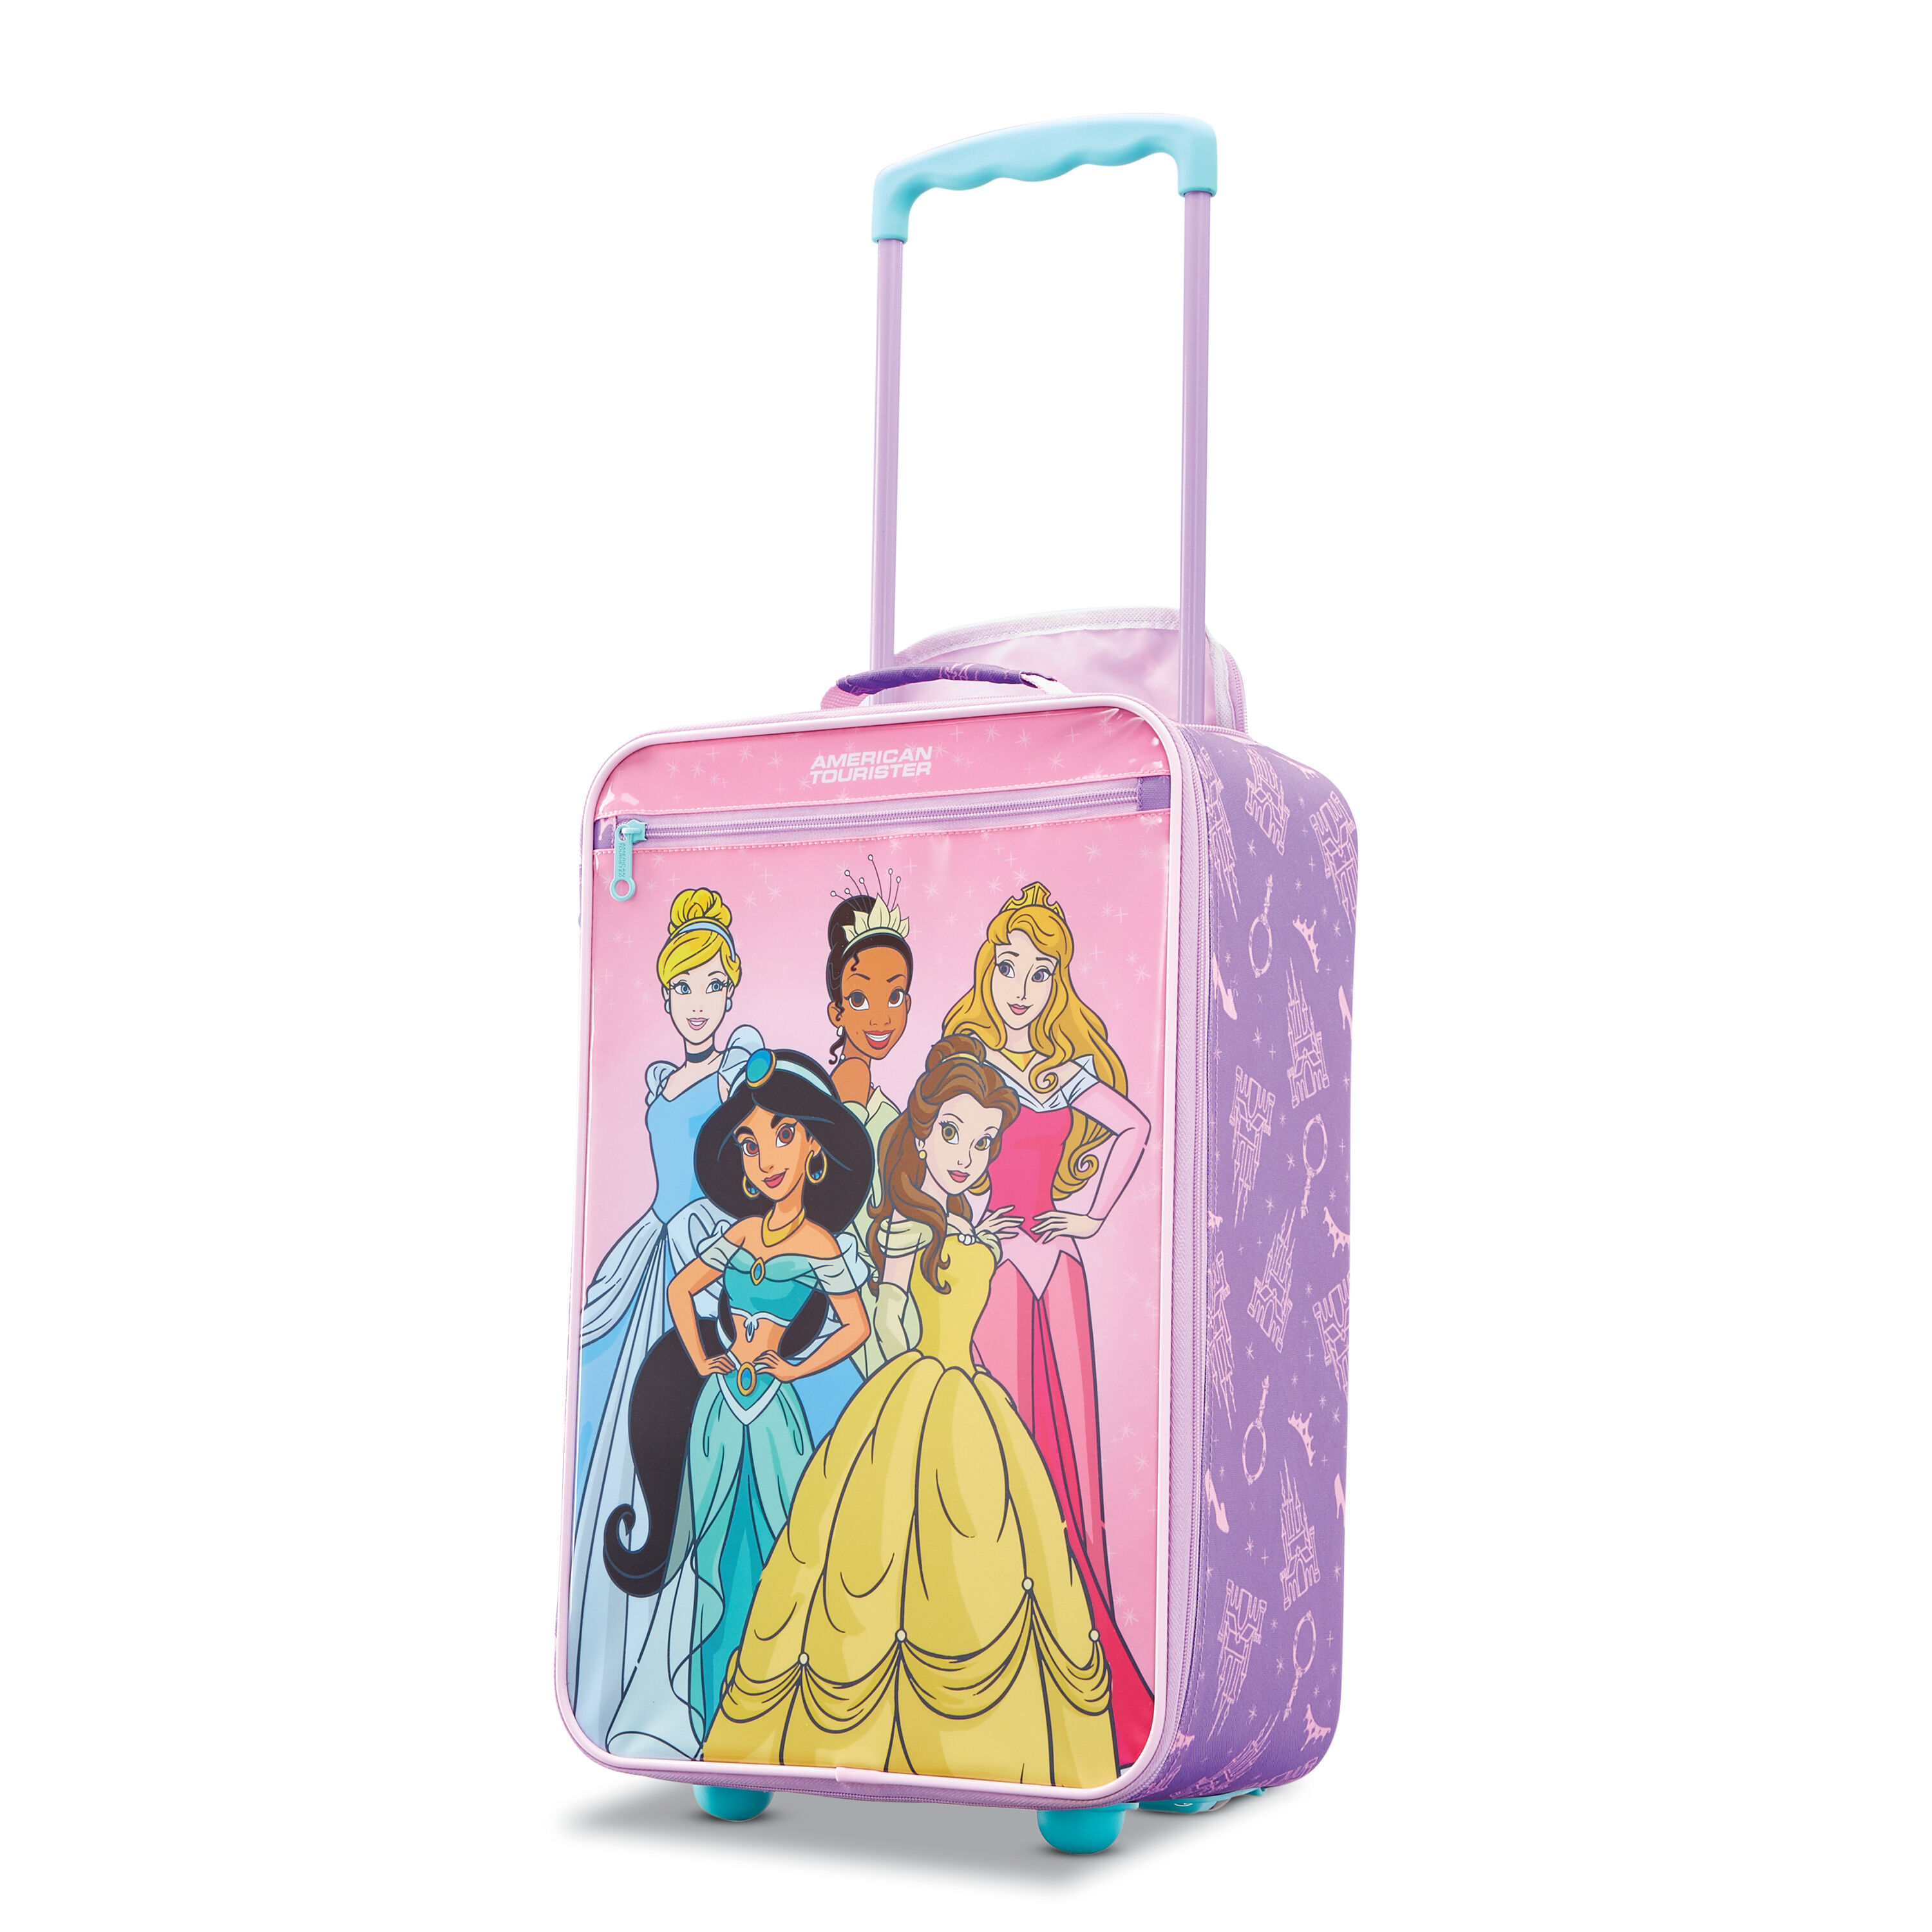 Malette boîte à coloriage princesse - Disney